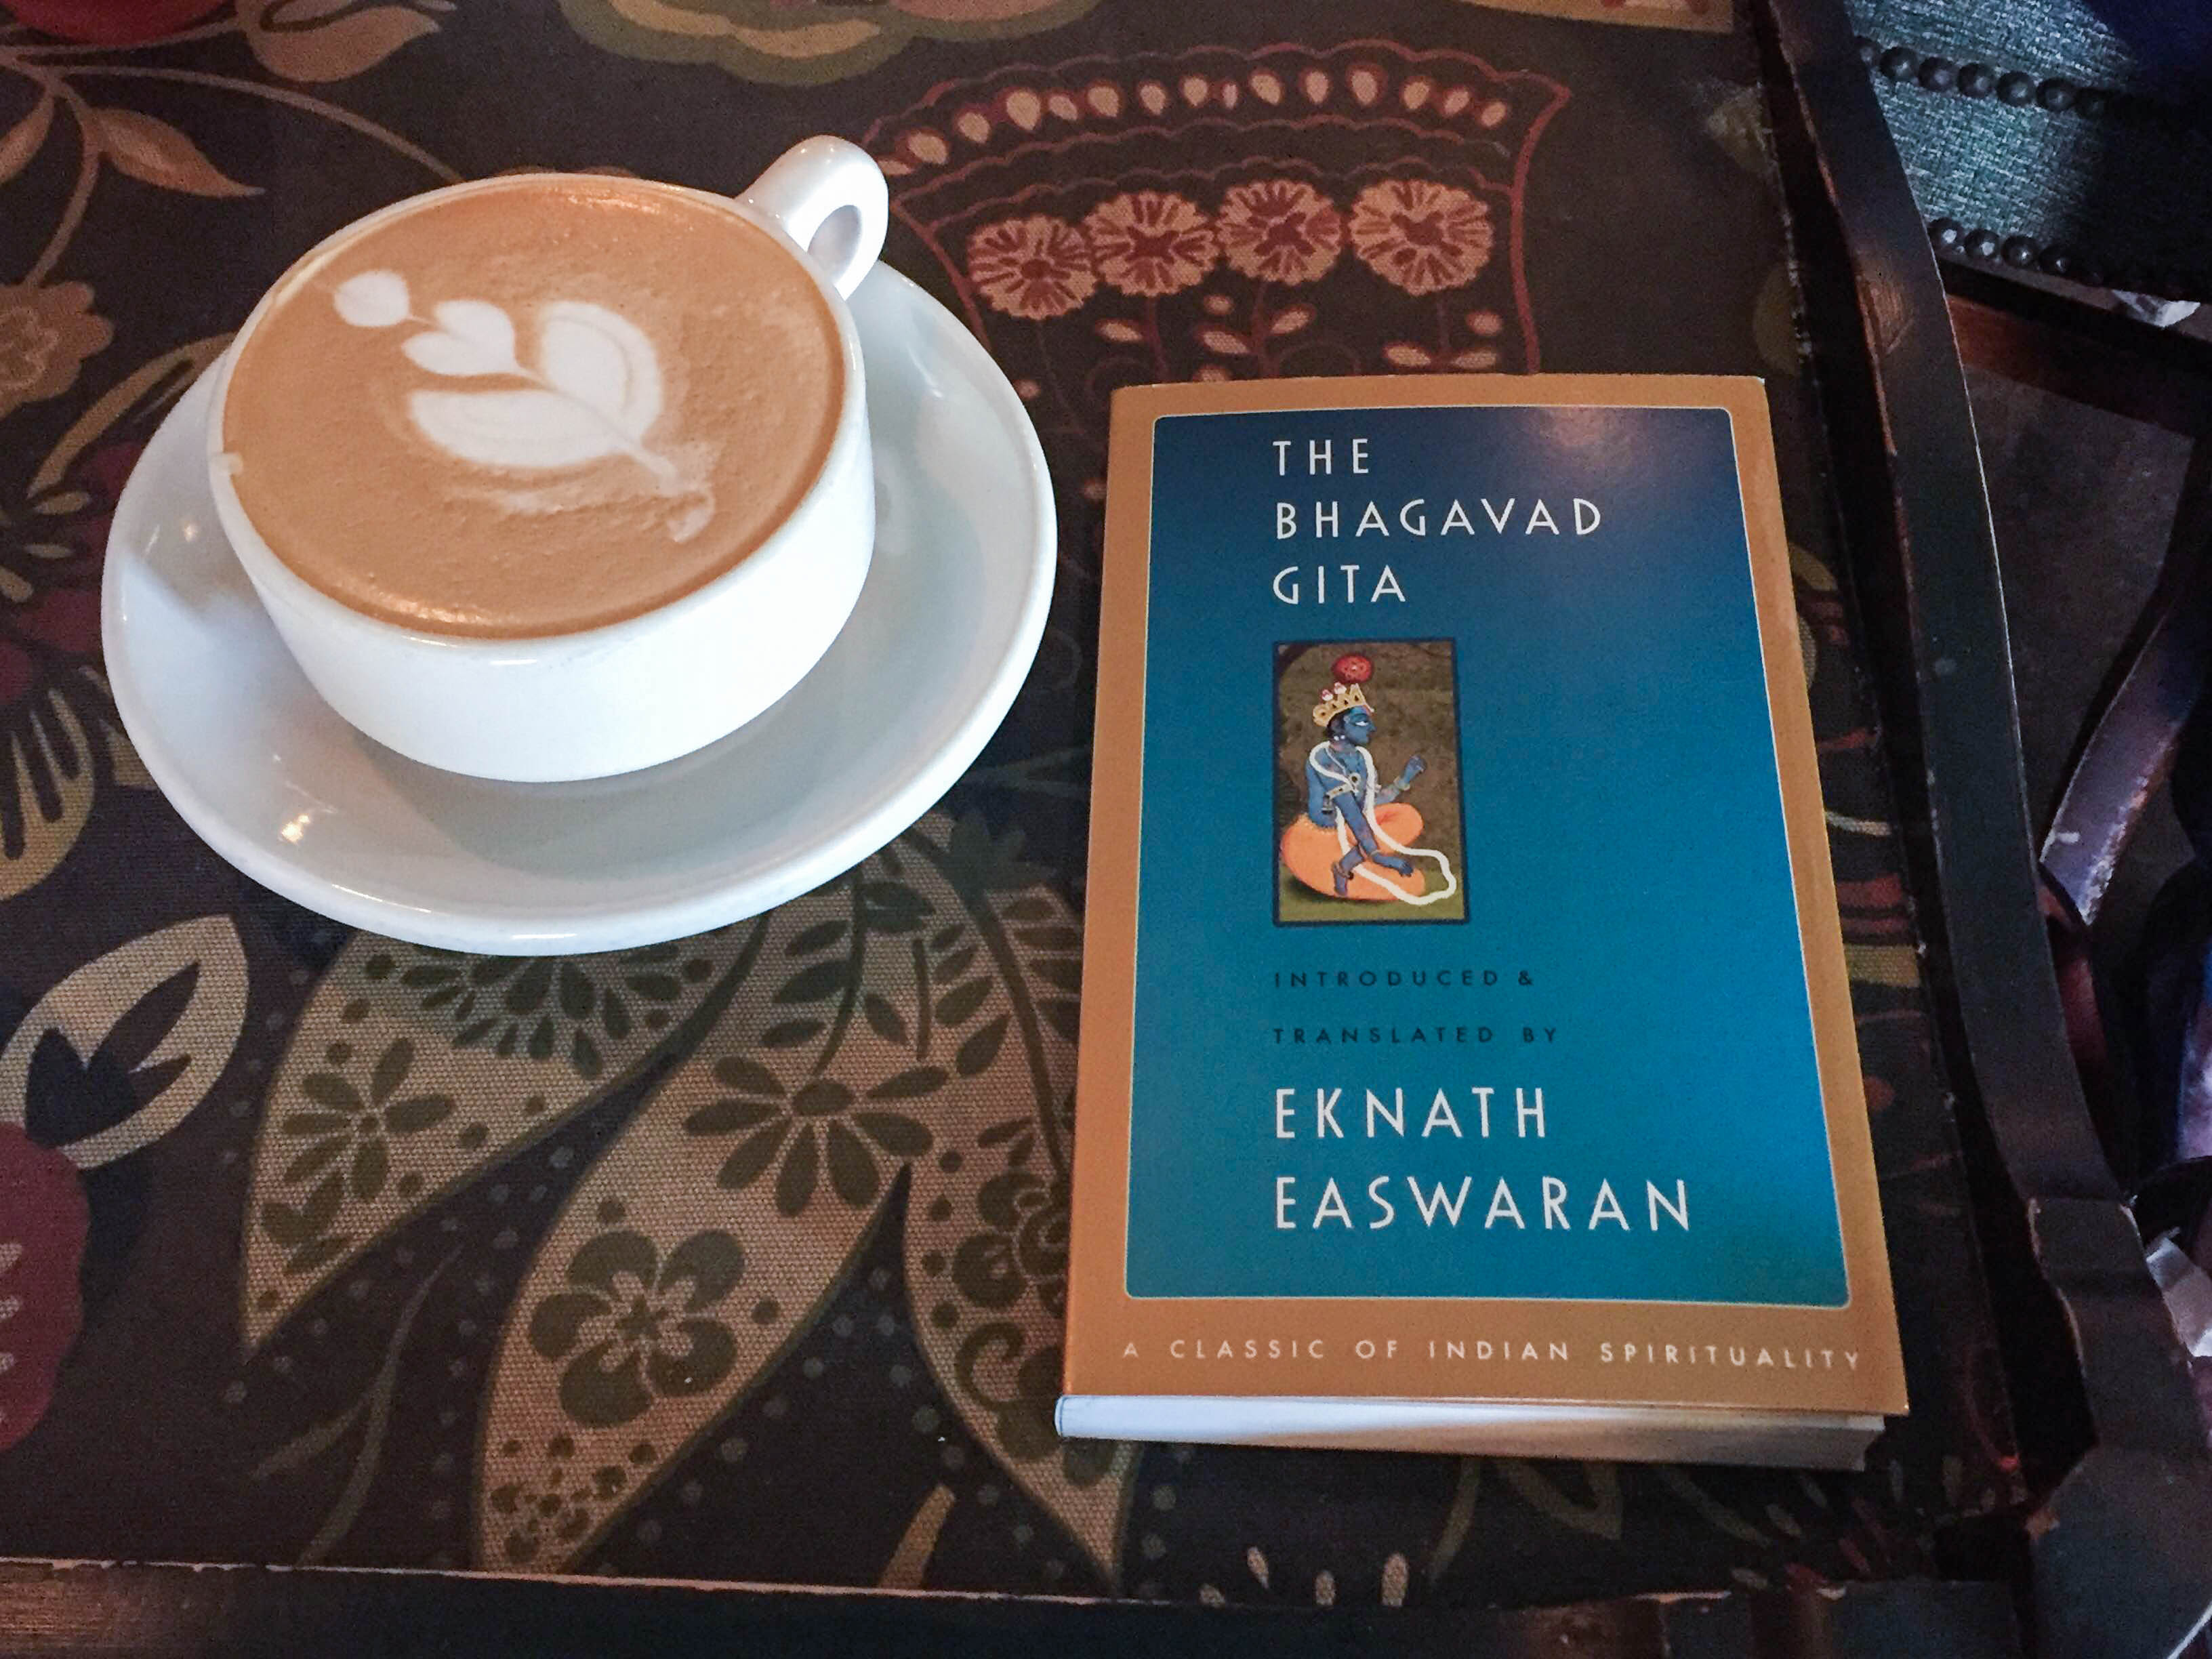 Coffee and The Bhagavad Gita